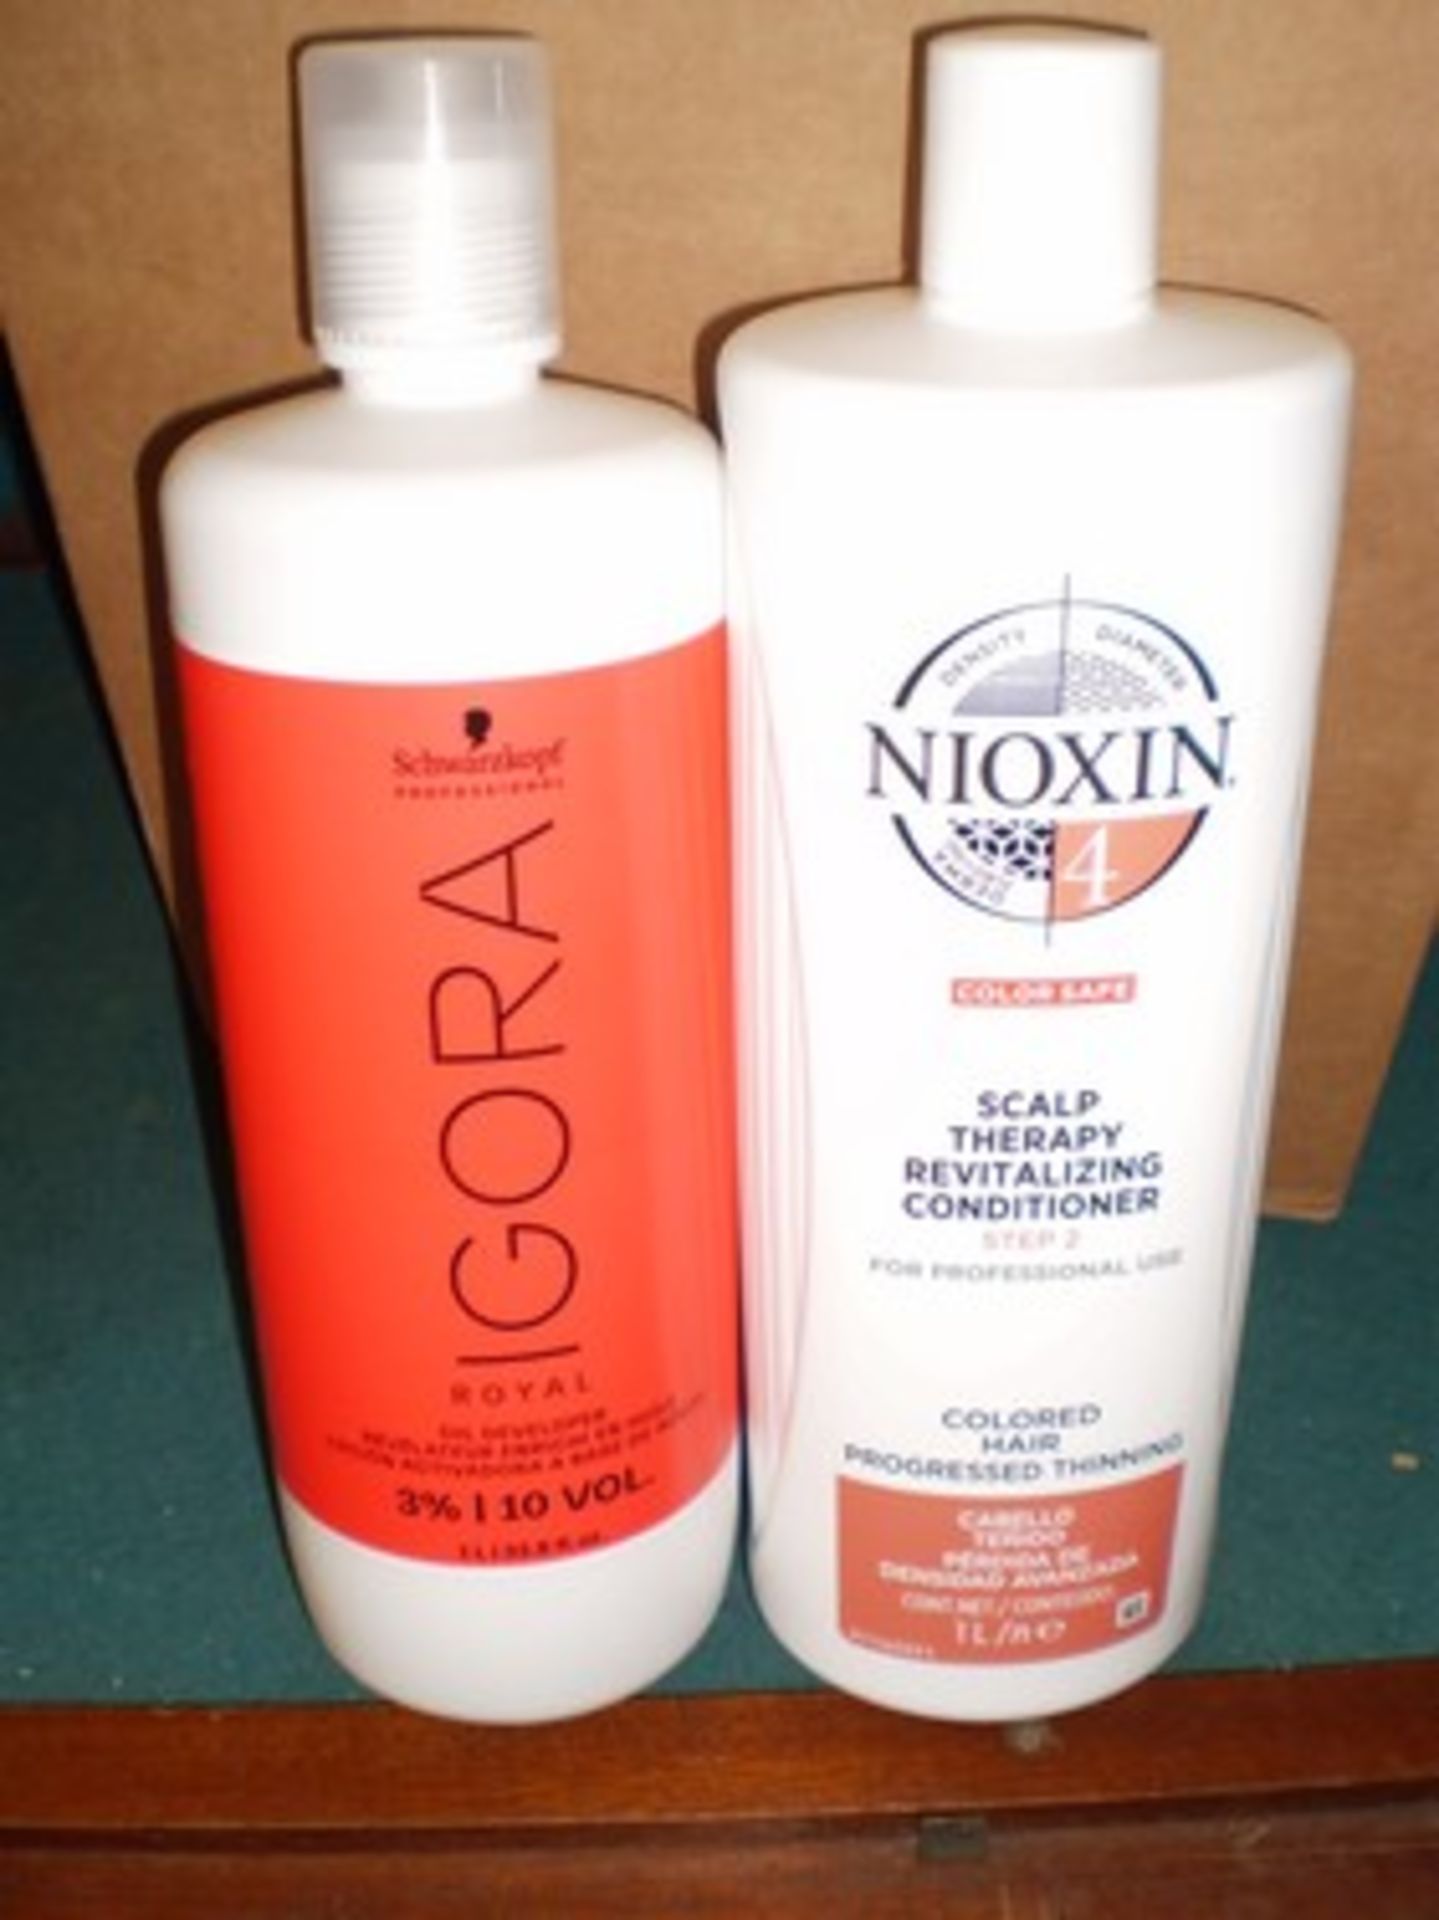 6 x 1L bottles of Schwarzkopf Gora oil developer and 3 x 1L bottles of Nioxin scalp therapy